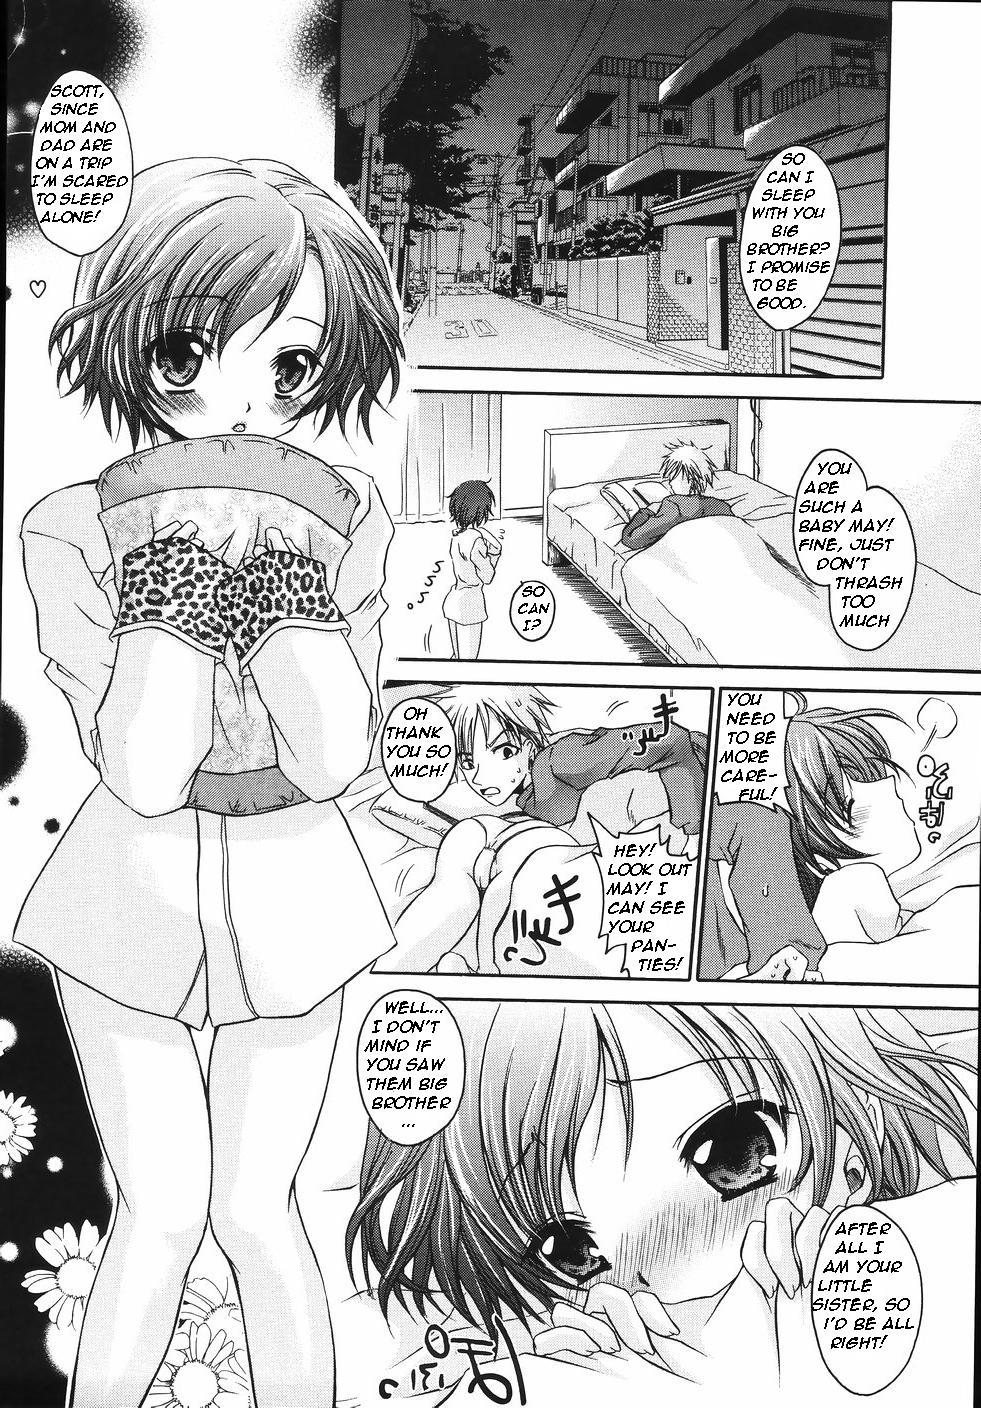 Manga Hentai Porn image #55917